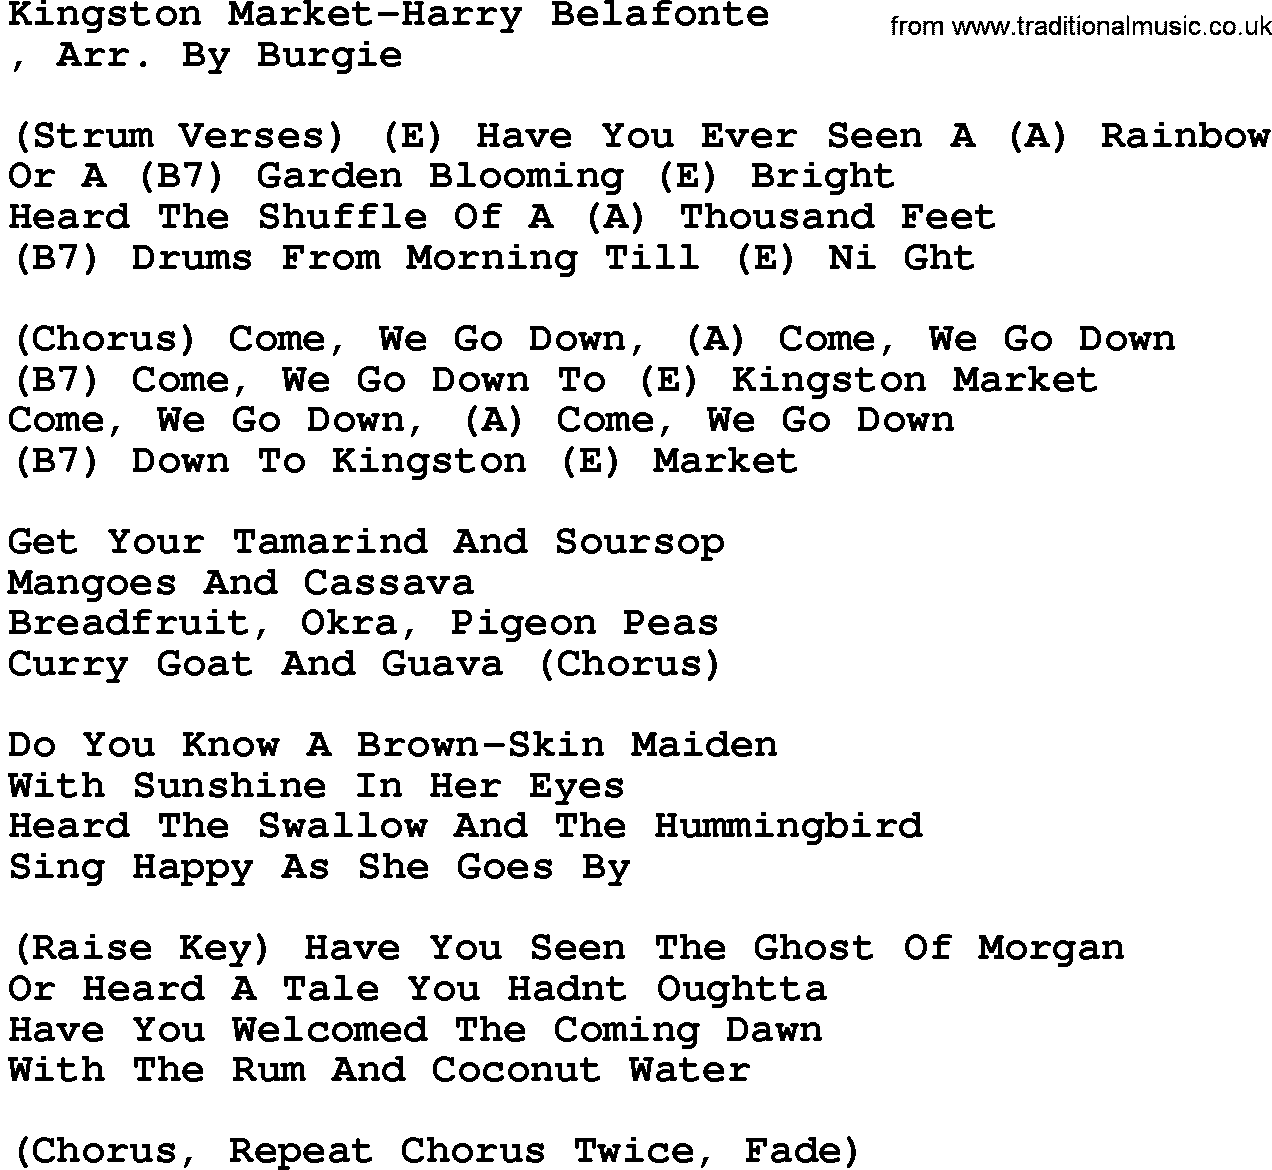 Country Music:Kingston Market-Harry Belafonte Lyrics and Chords